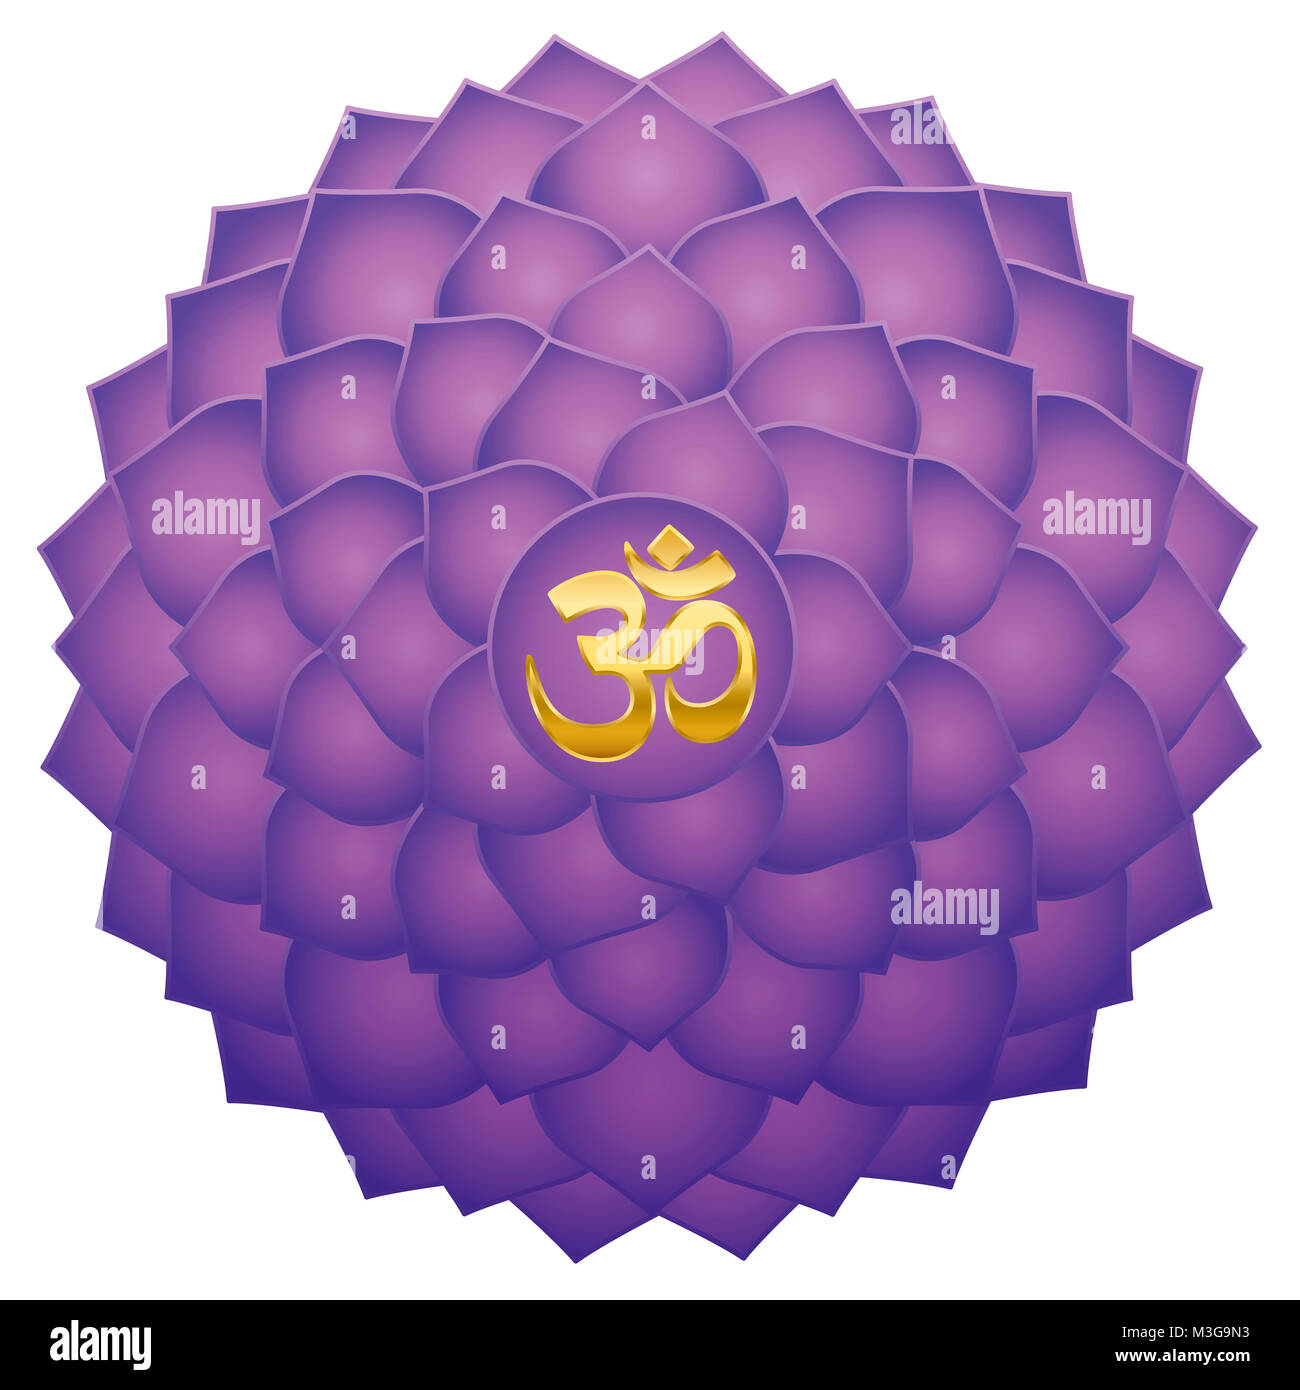 Chakra de la corona con el Aum u Om símbolo en el centro. Mil petaled Sahasraha lotus o púrpura. Símbolo de la curación espiritual. Foto de stock